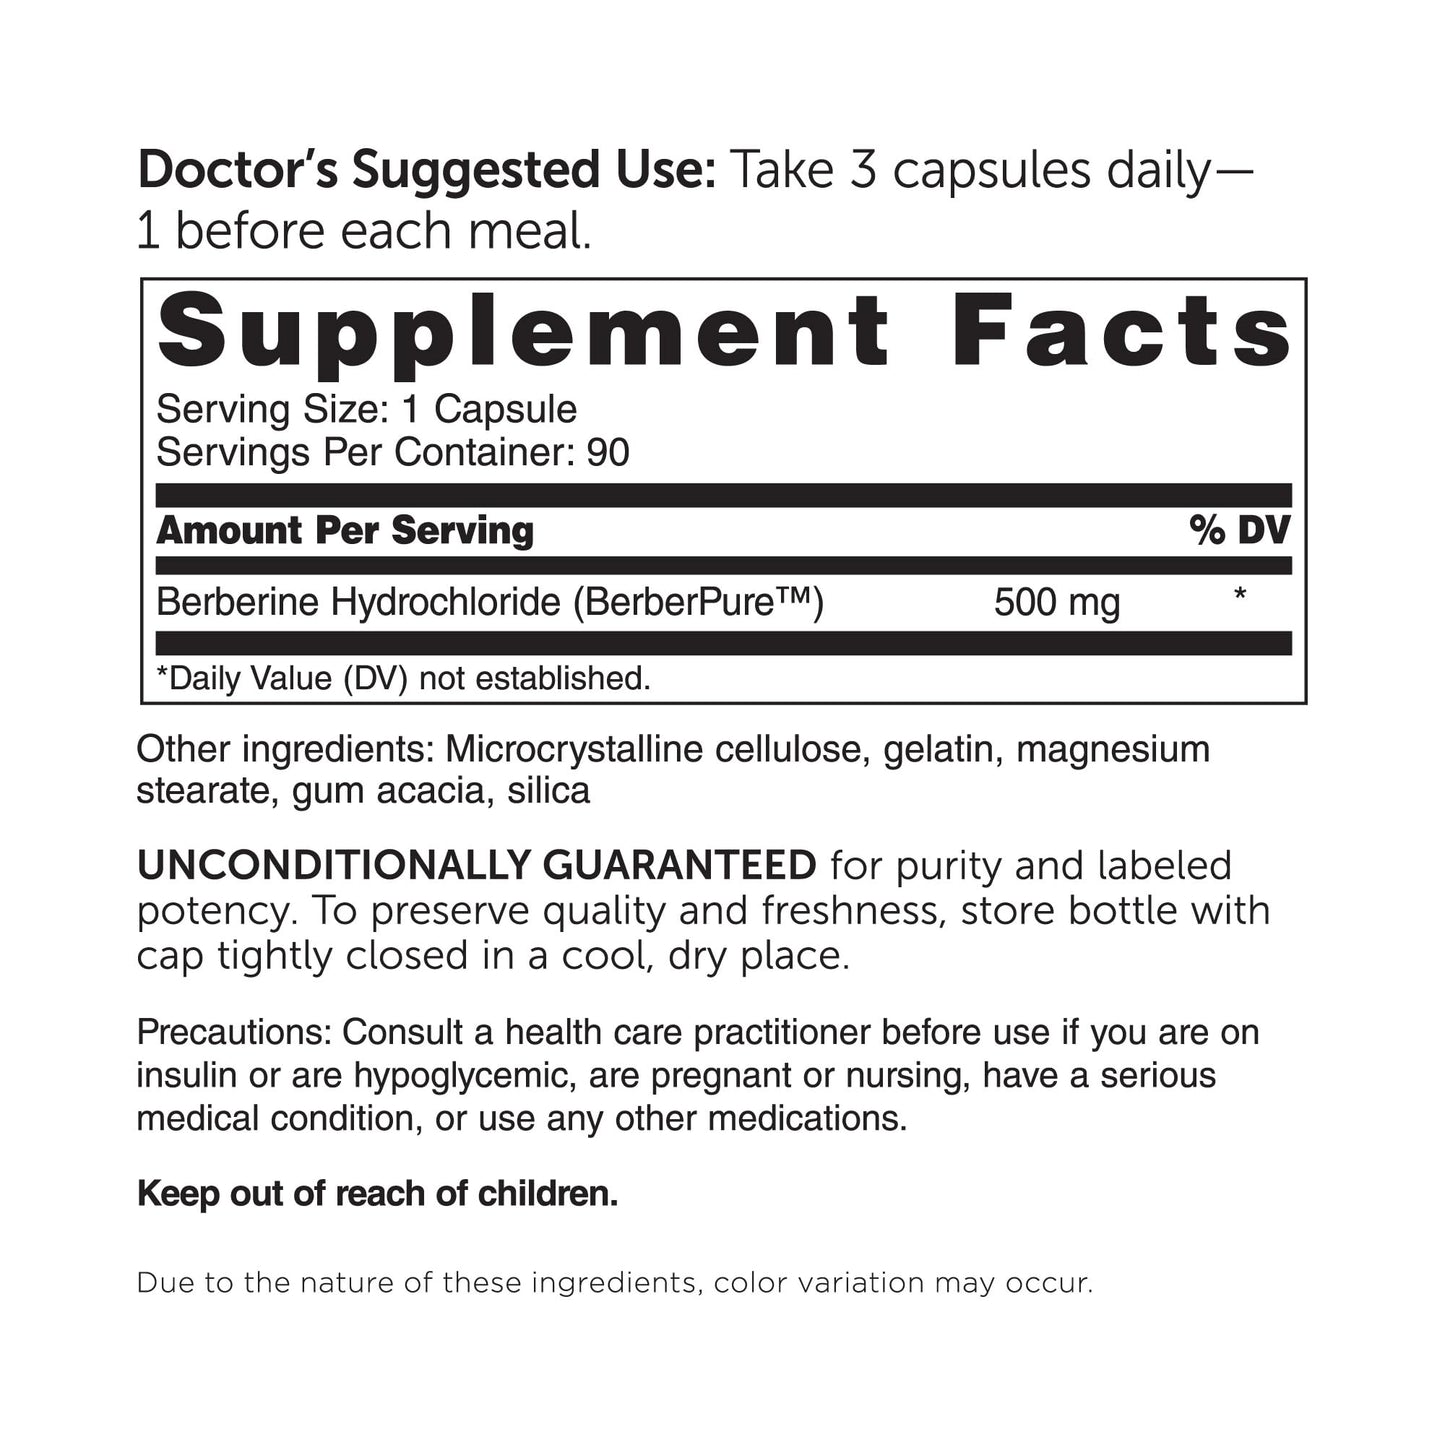 Dr. Whitaker's Berberine 1,500 mg Supplement (90 Capsules)